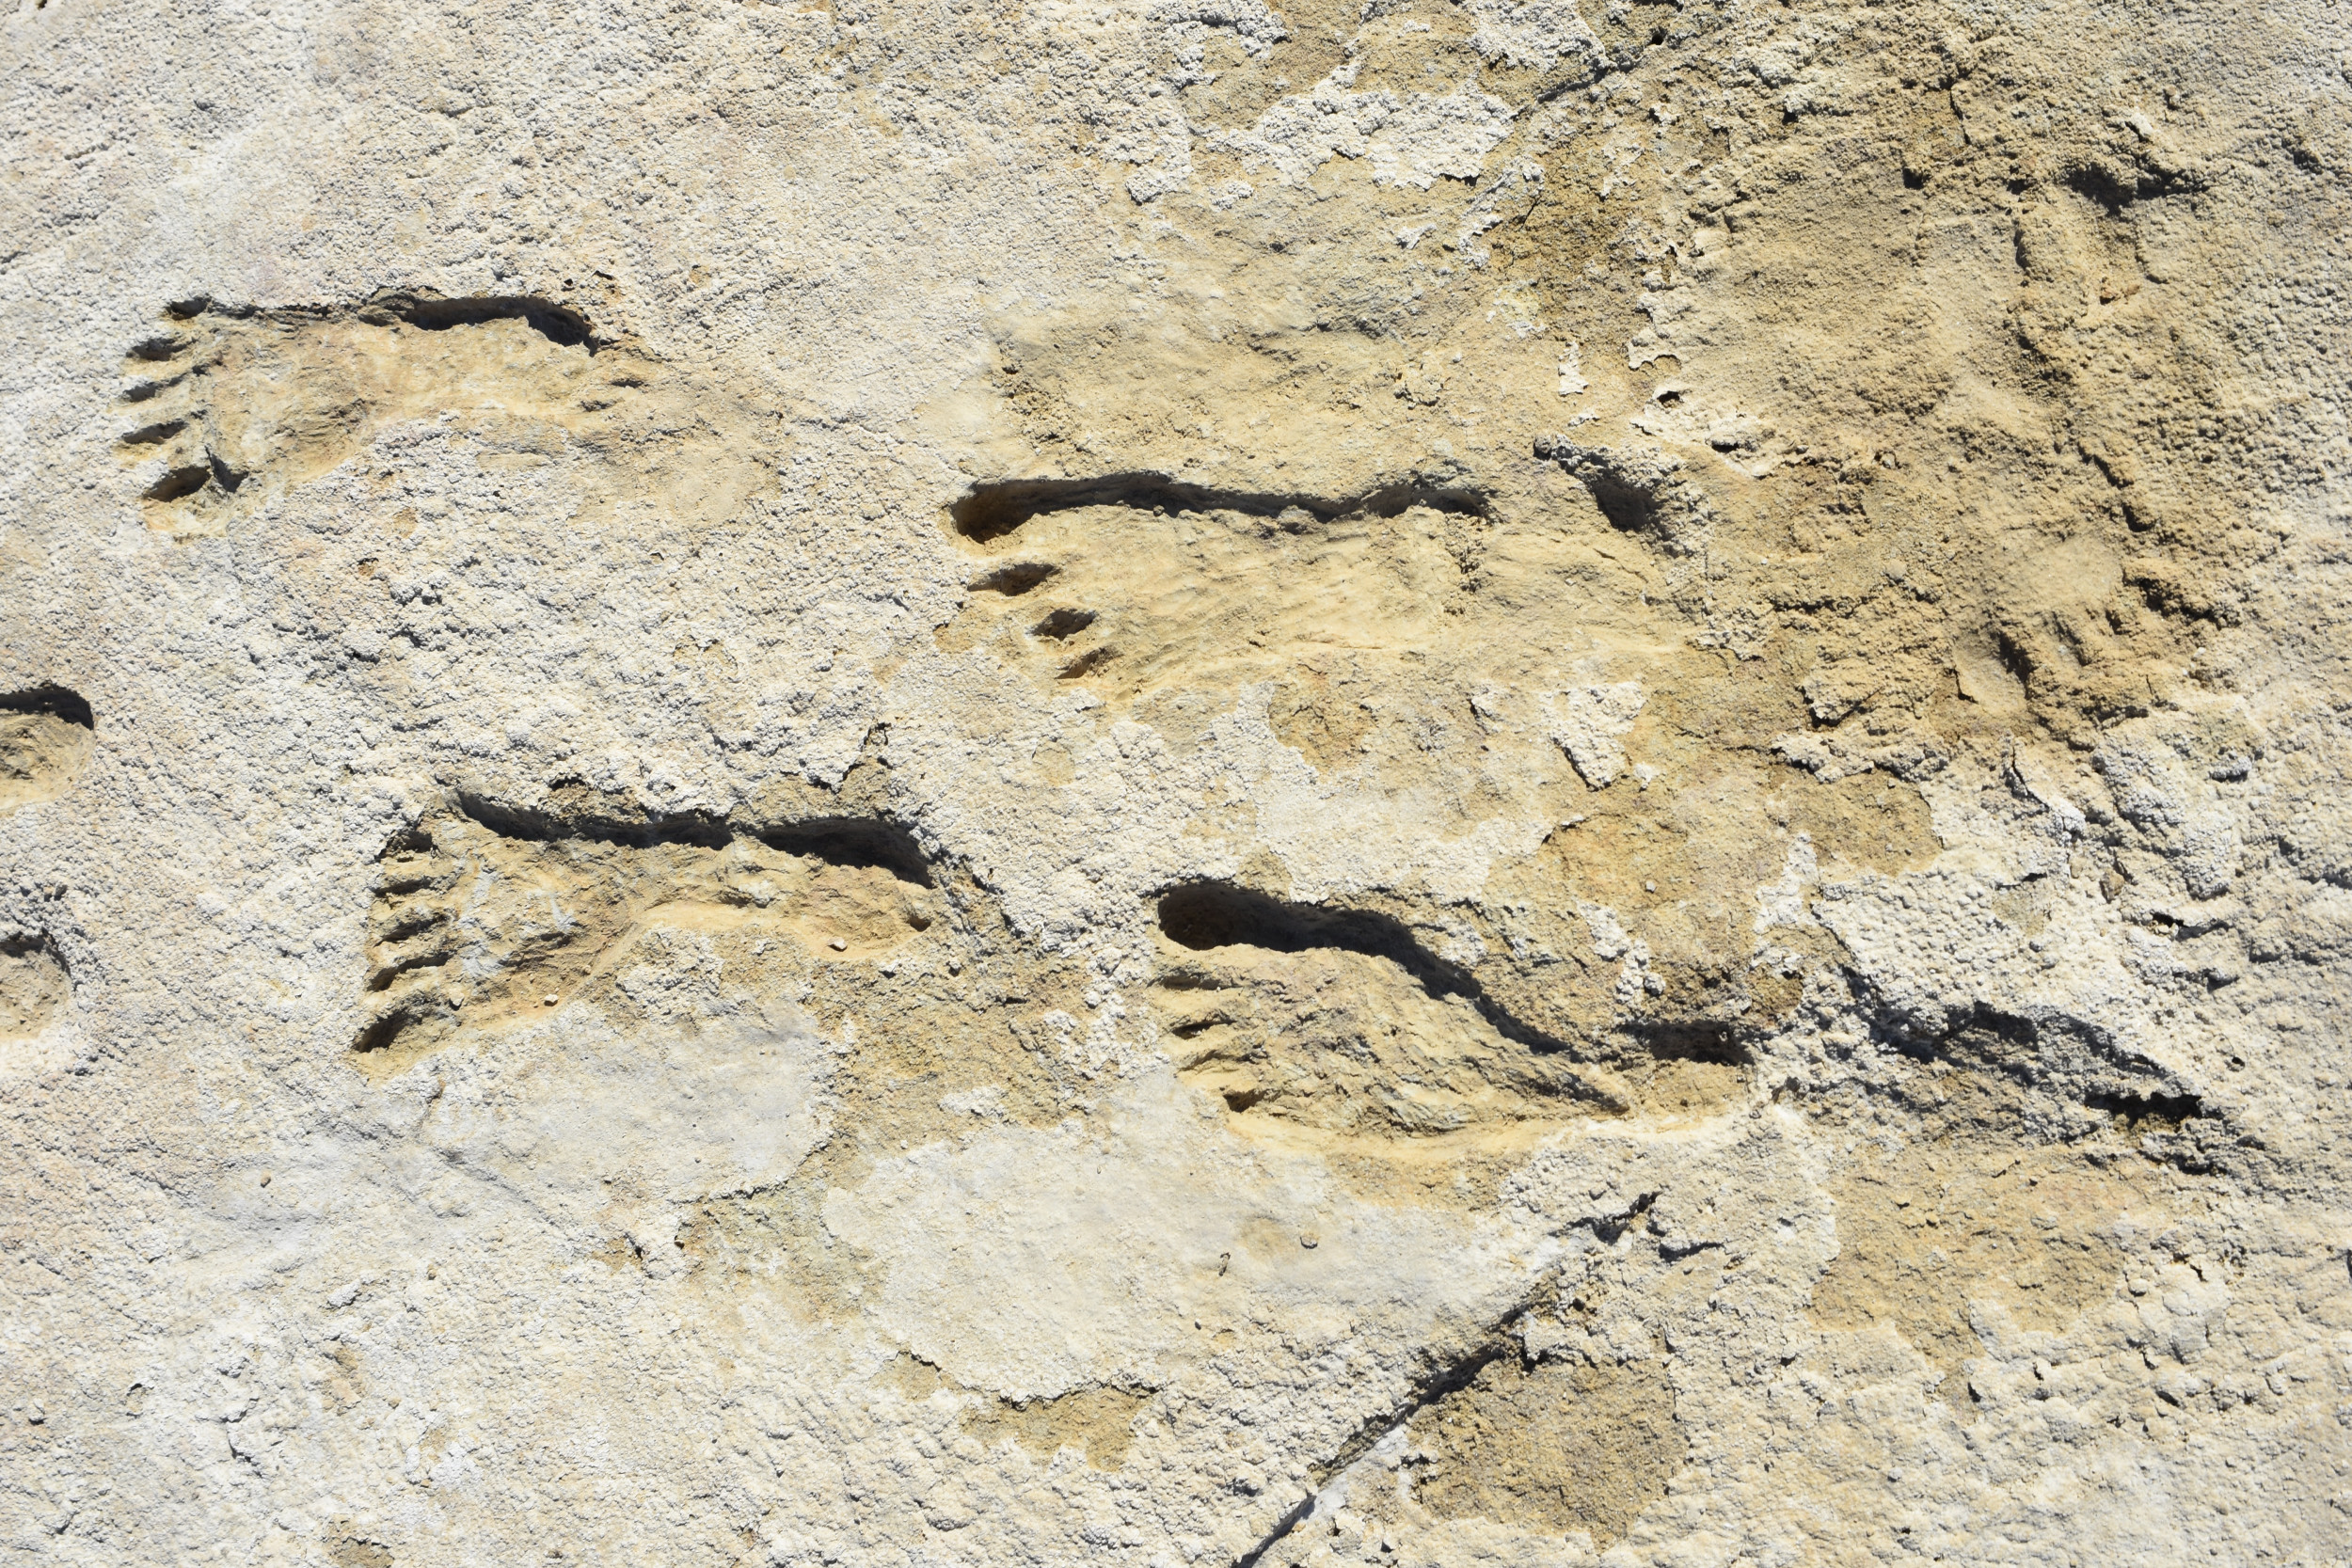 https://d.newsweek.com/en/full/2045292/fossilized-human-footprints-new-mexico.jpg